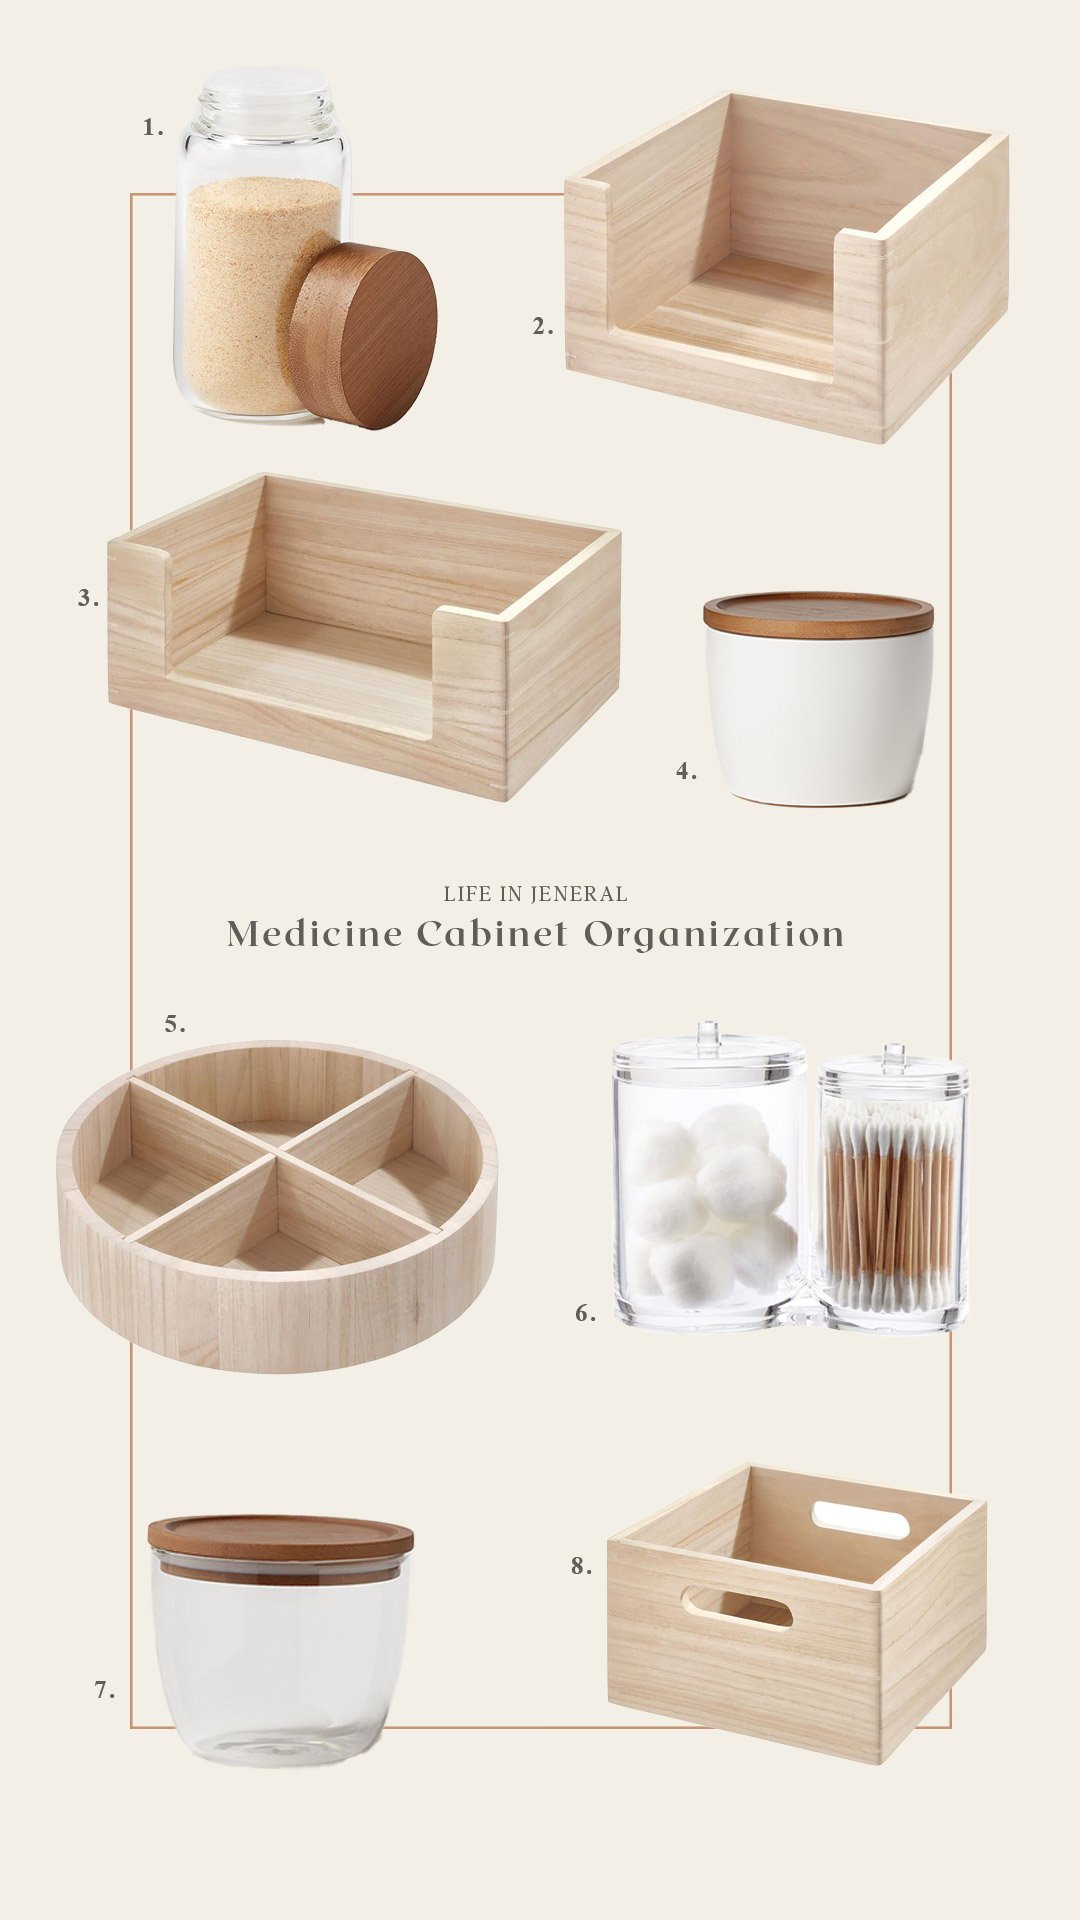 Medicine Cabinet Organization 101 — Life in Jeneral